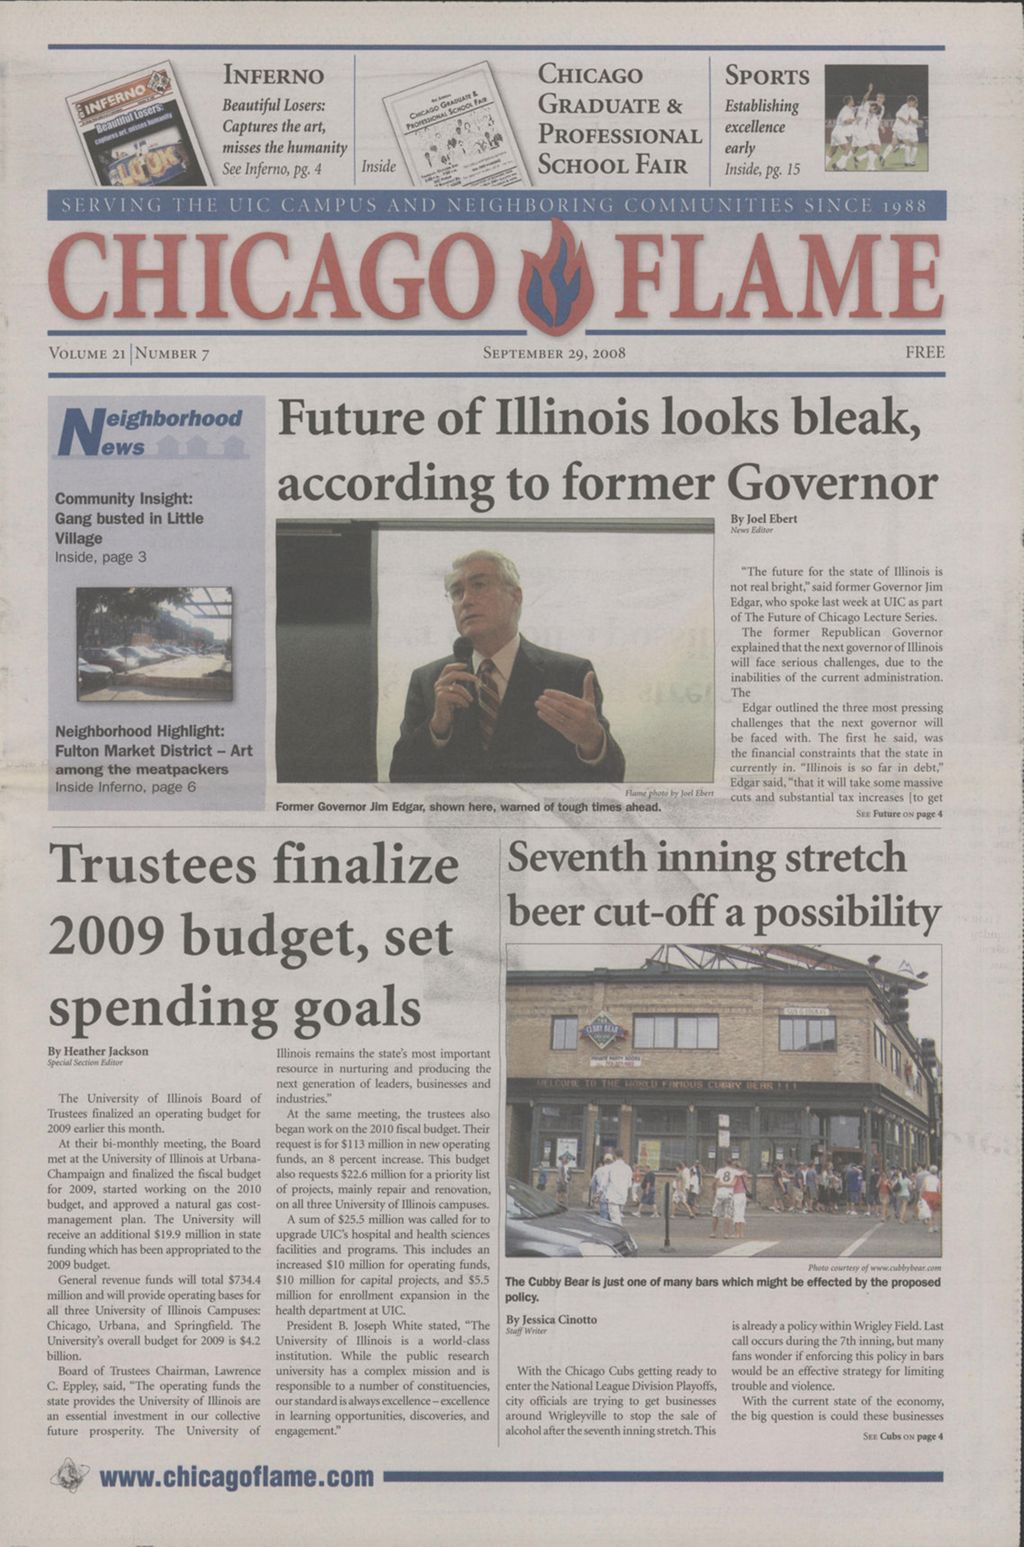 Chicago Flame (September 29, 2008)